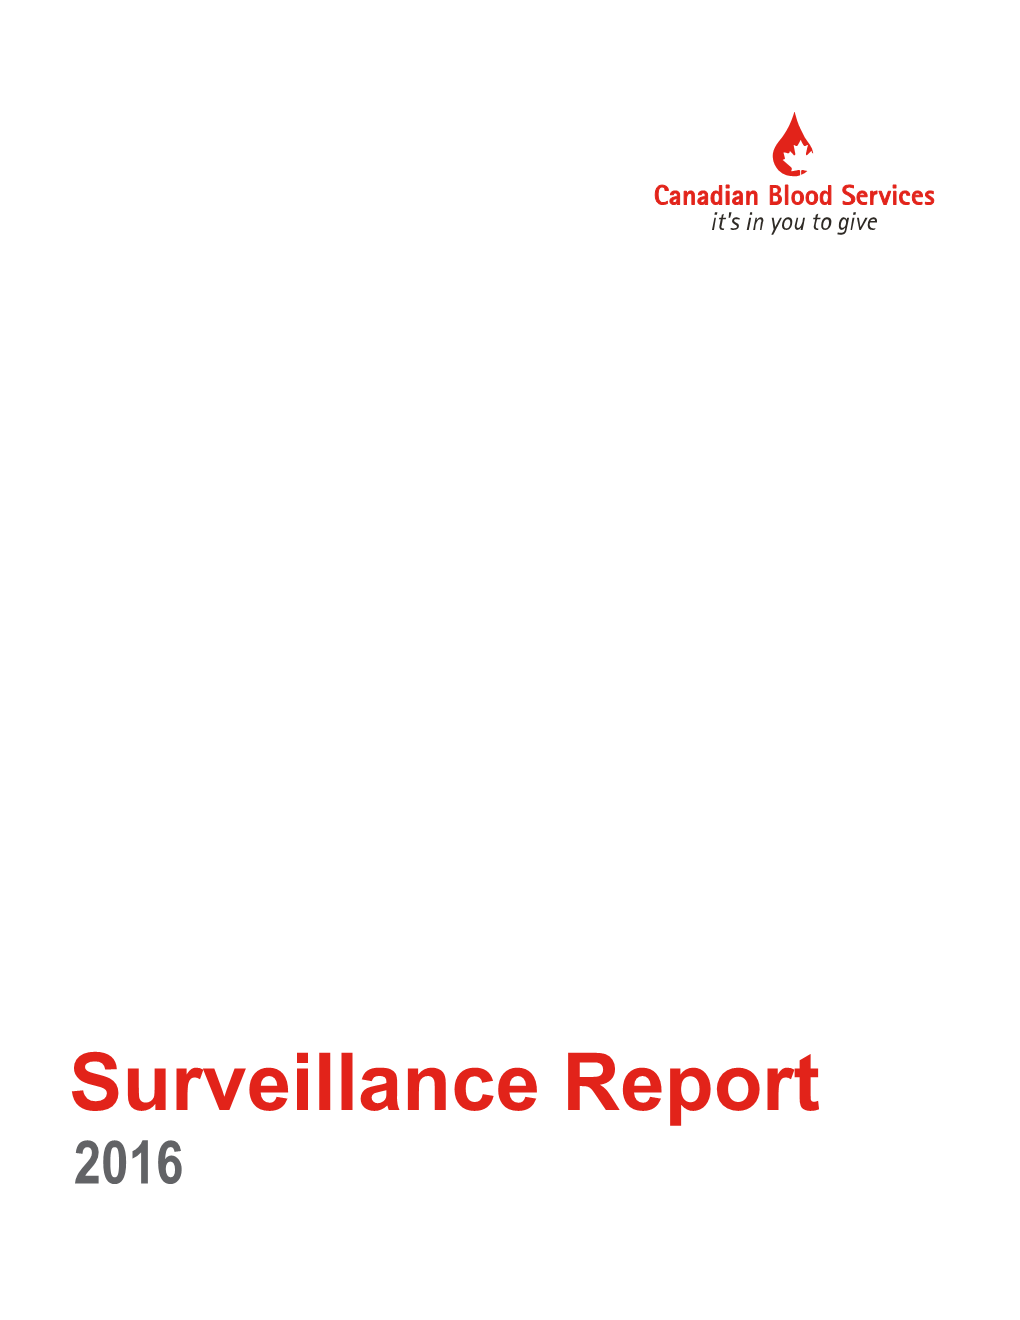 Surveillance Report 2016 Executive Summary